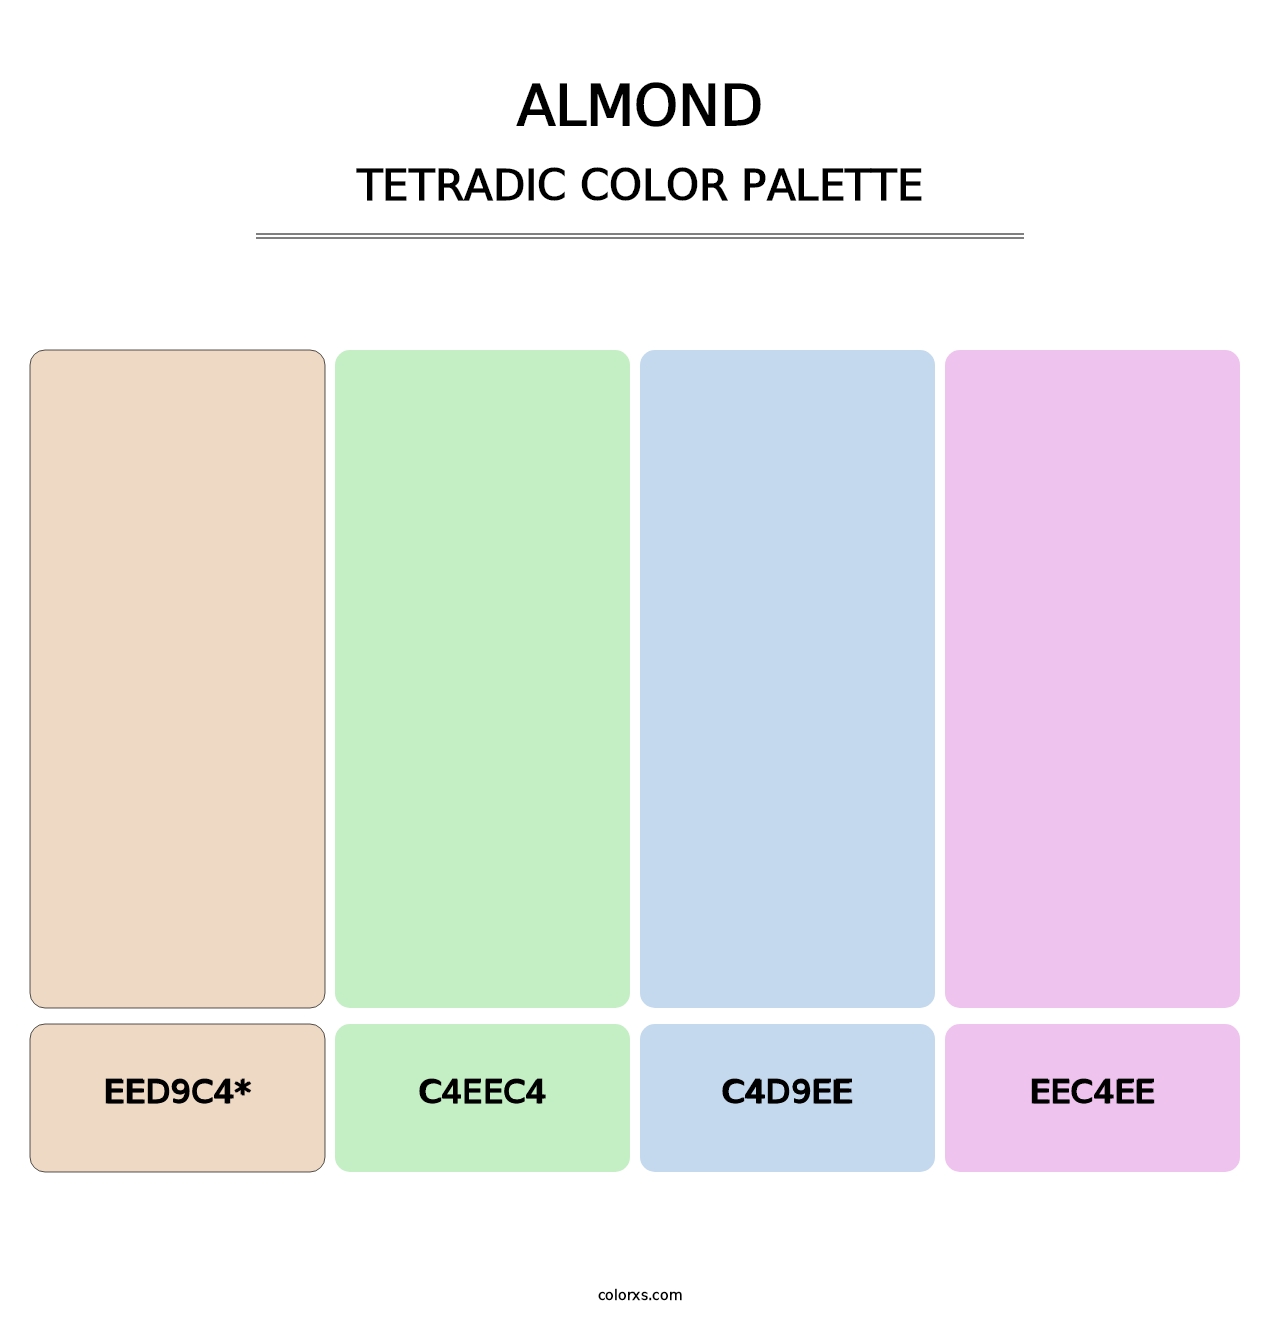 Almond - Tetradic Color Palette